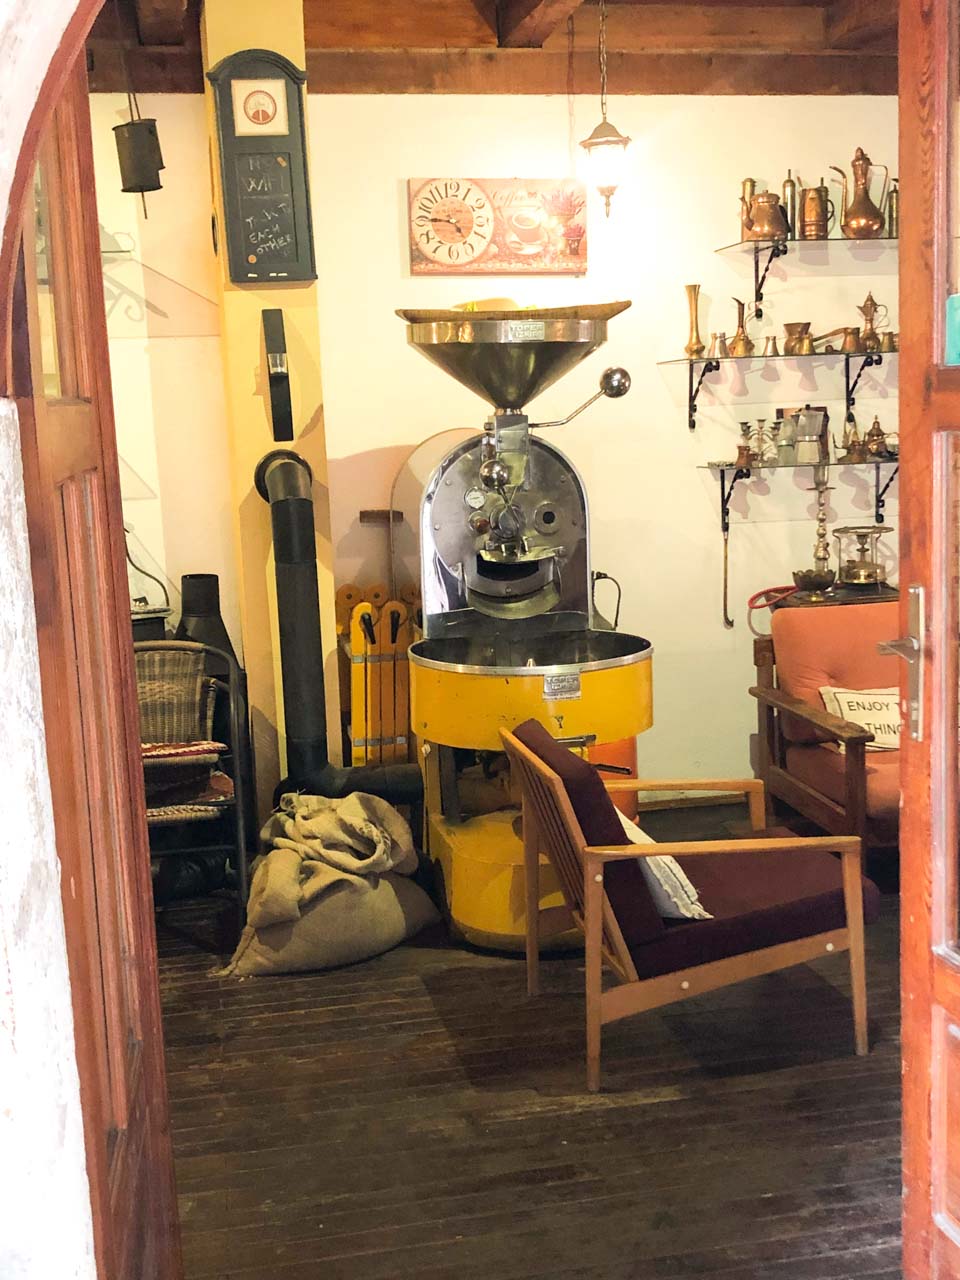 Coffee grinding equipment at Café de Alma in Mostar